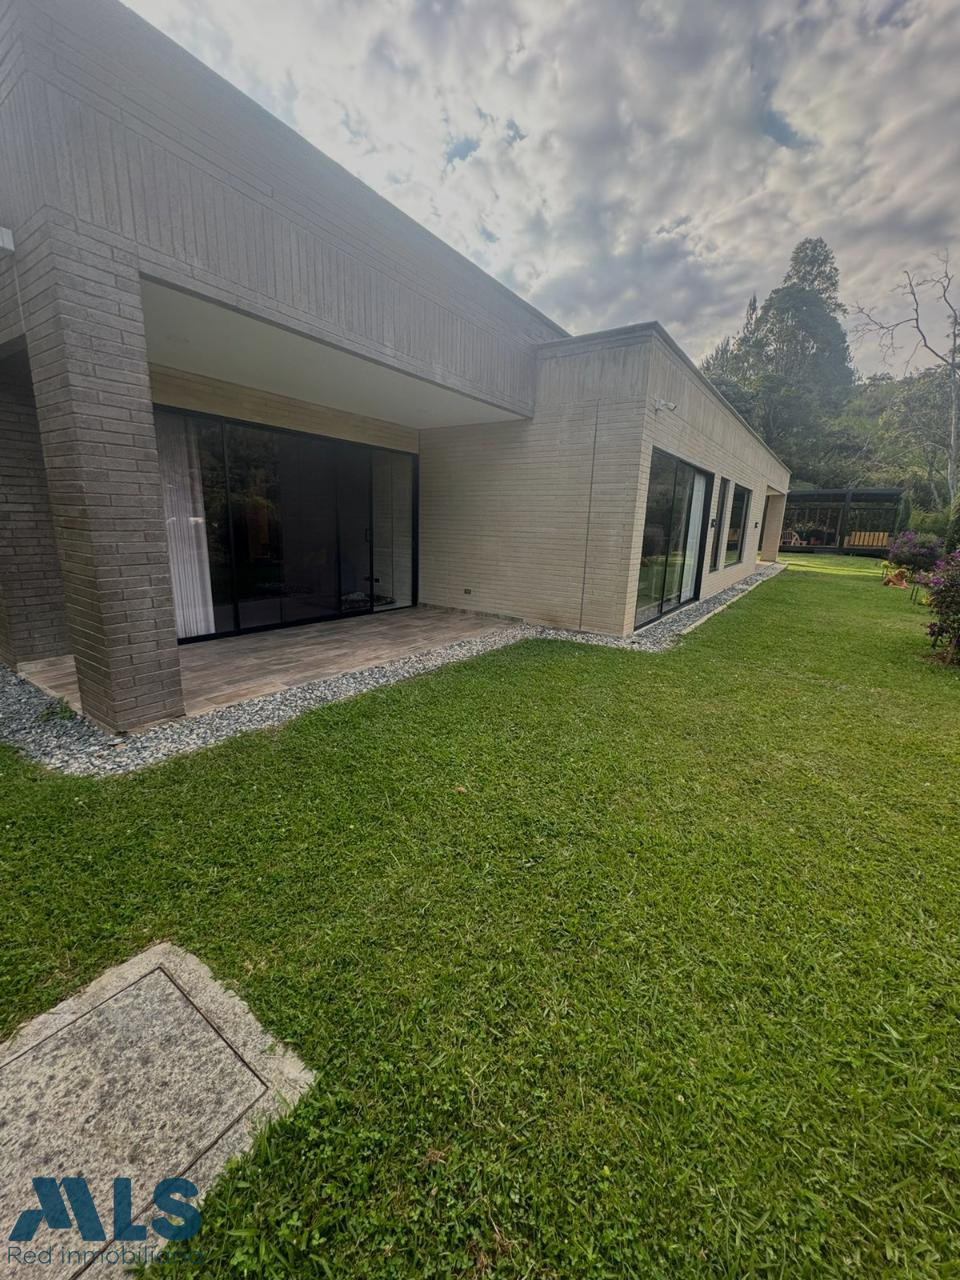 Casa moderna pensada hasta le último detalle ubicada en el Retiro el-retiro - v don diego